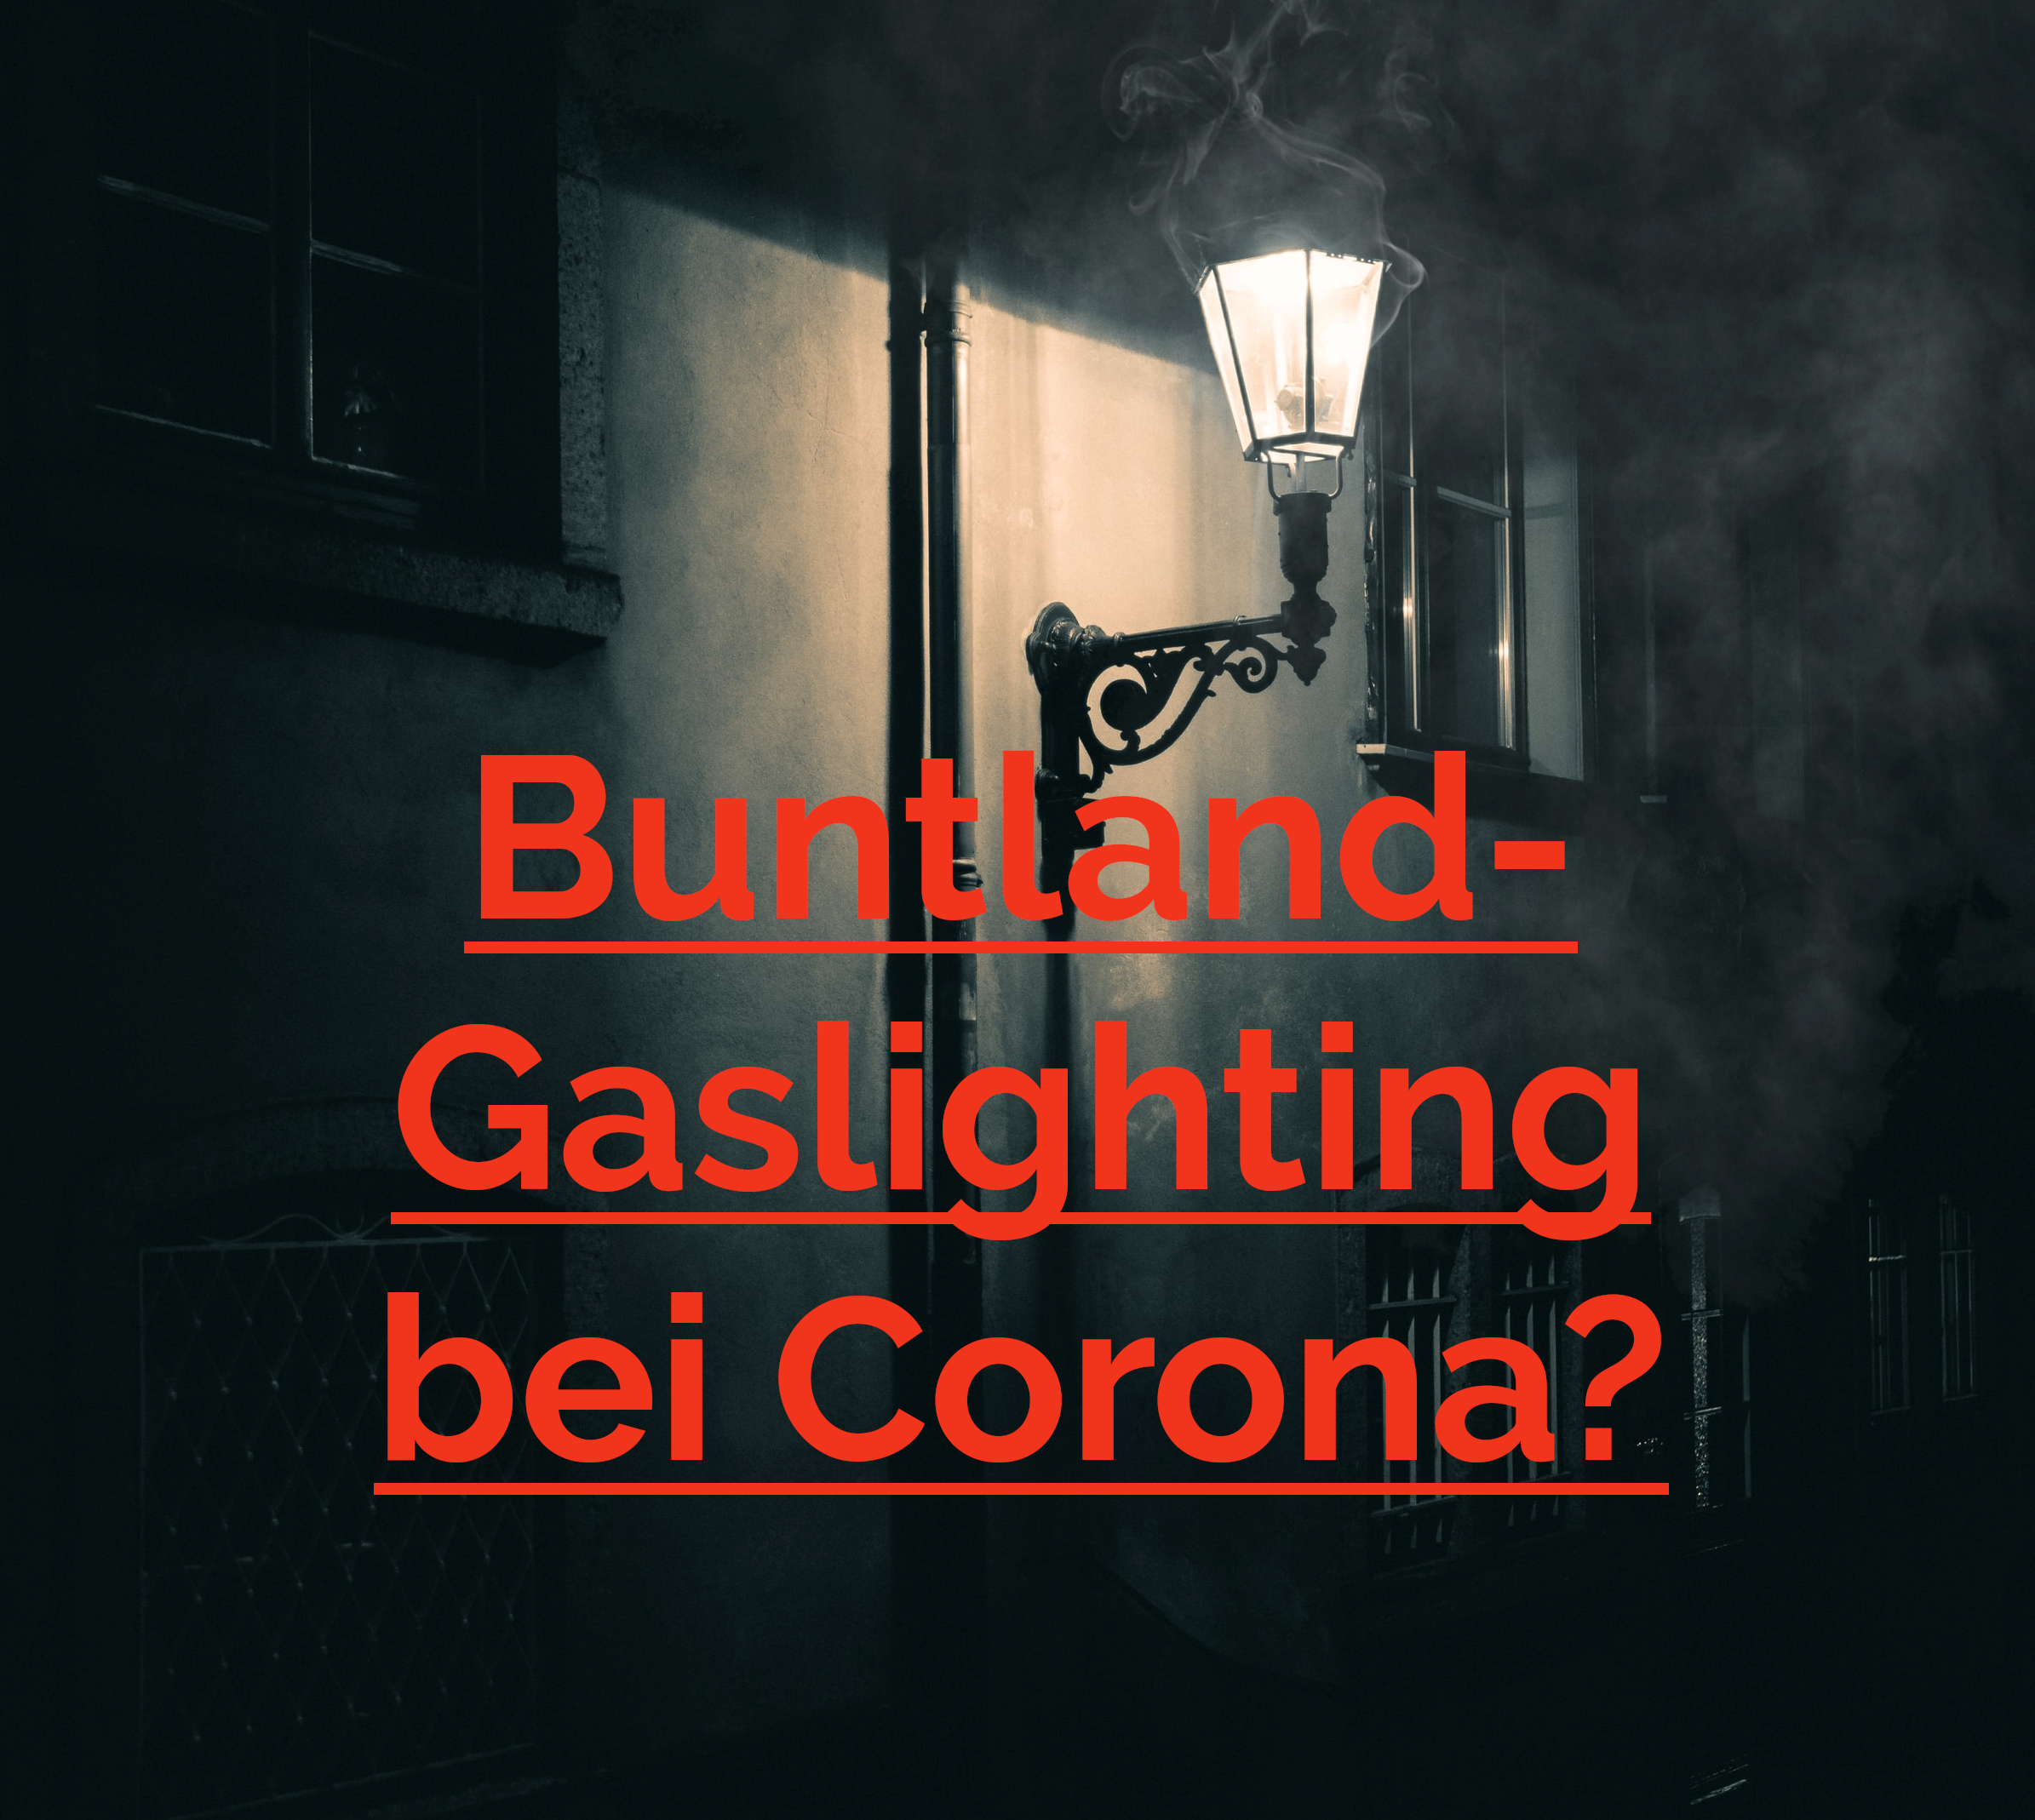 Buntland-Gaslighting bei Corona-Berichterstattung?